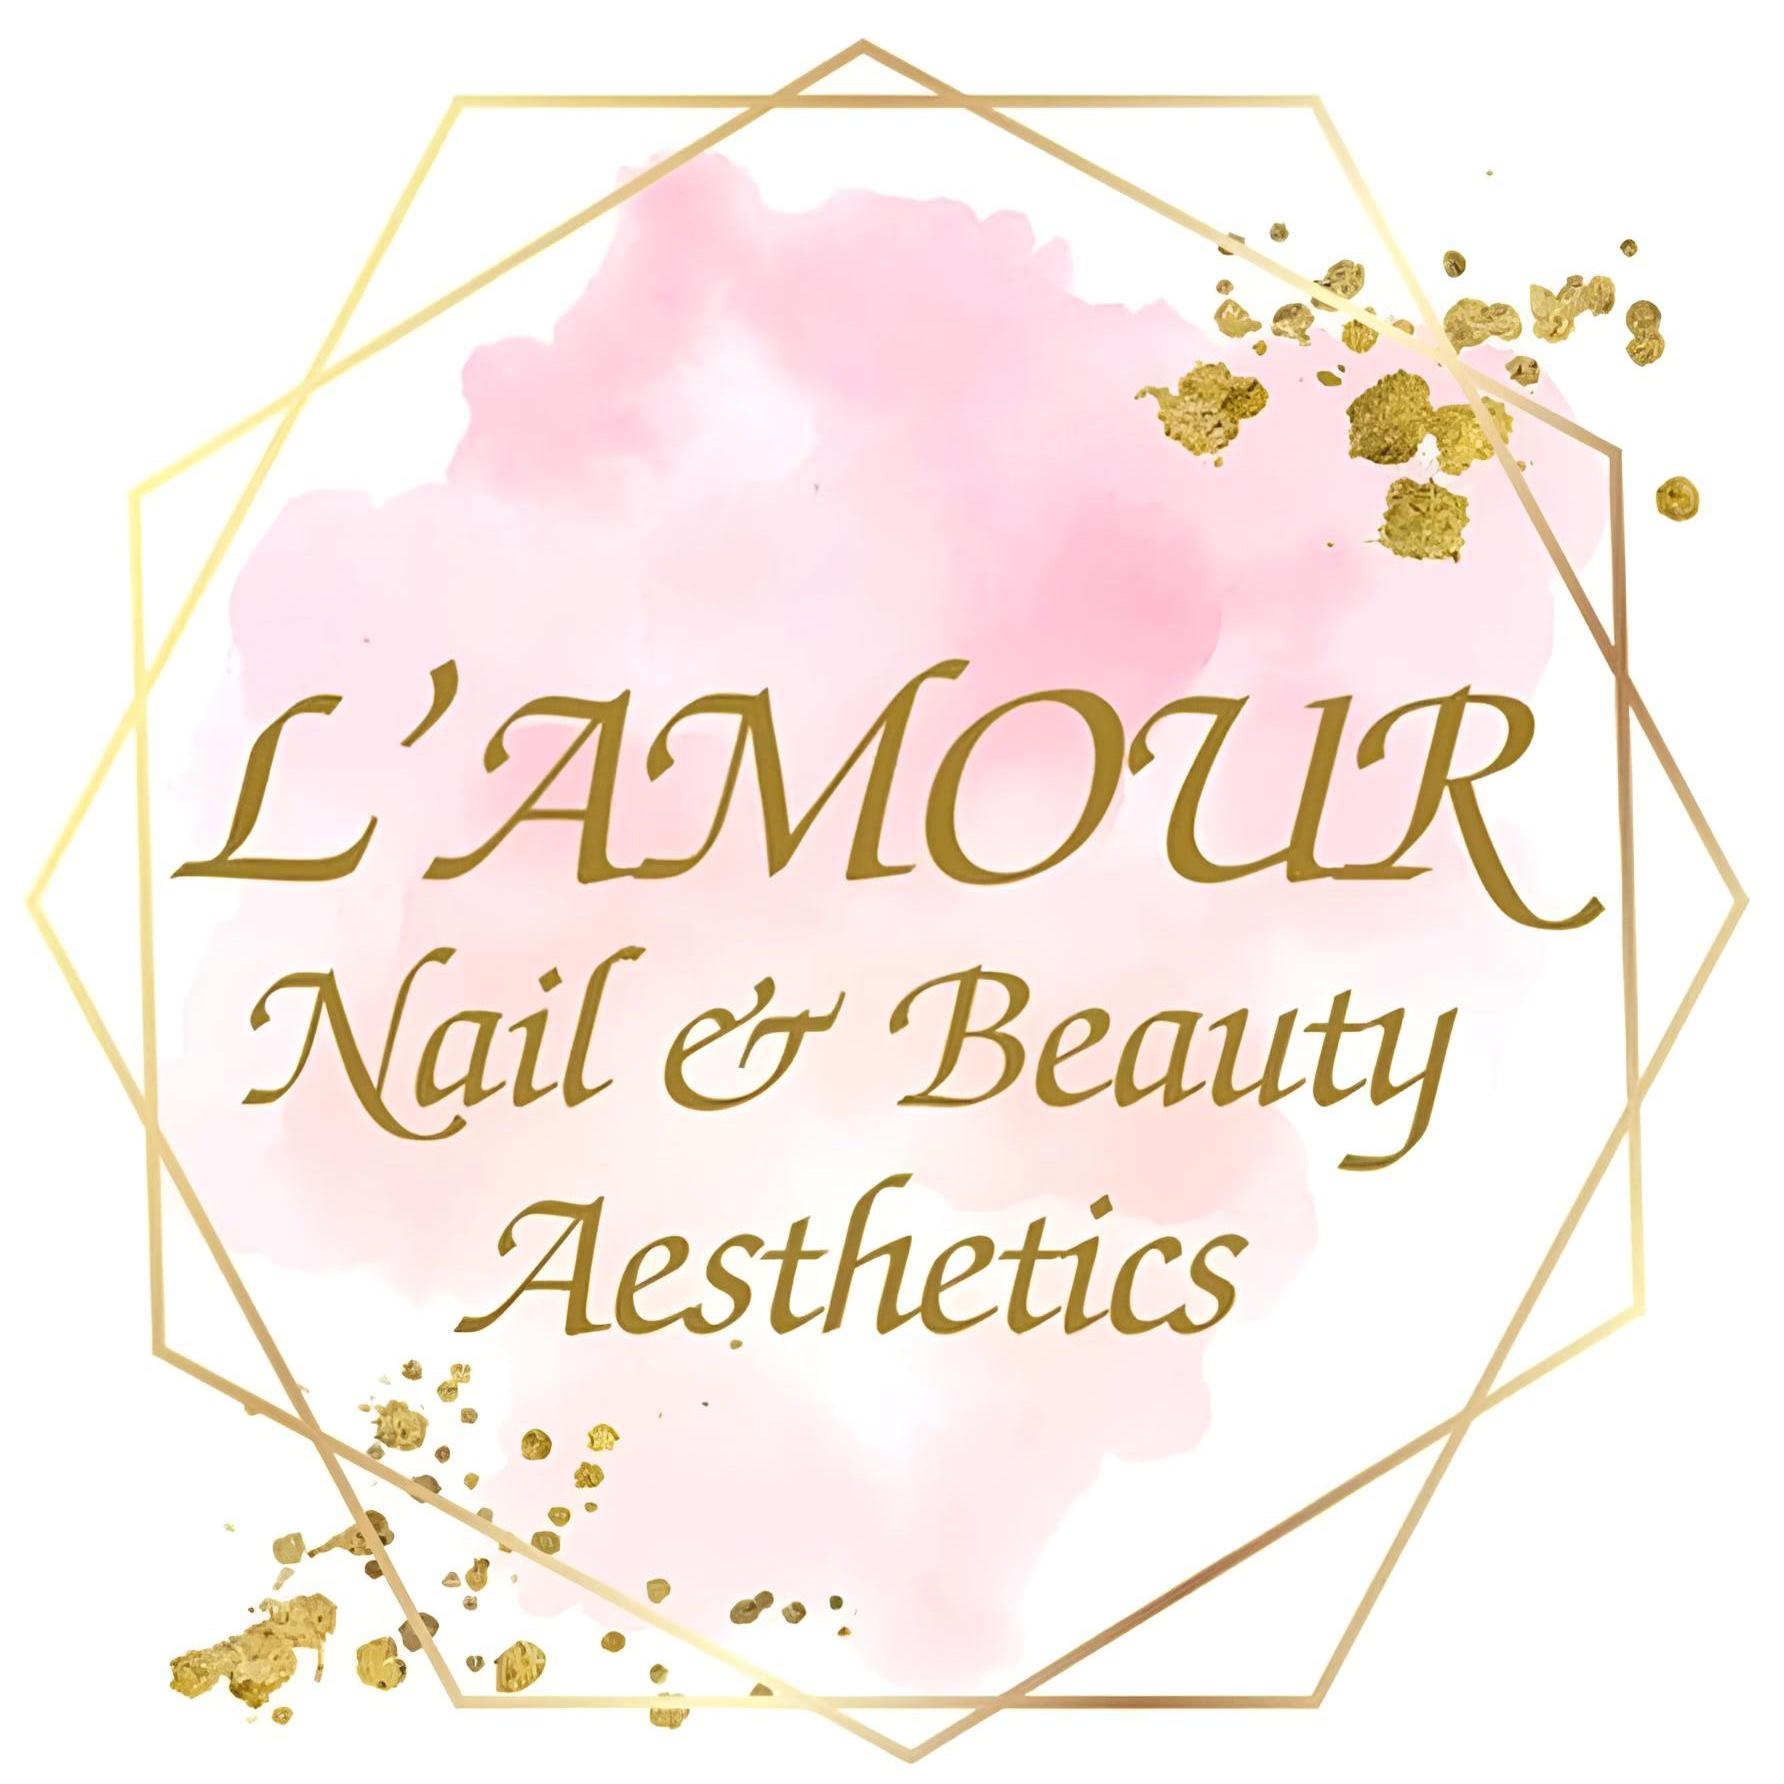 L'Amour Beauty Salon - Newcastle Upon Tyne, Tyne and Wear NE13 7BA - 07543 913402 | ShowMeLocal.com